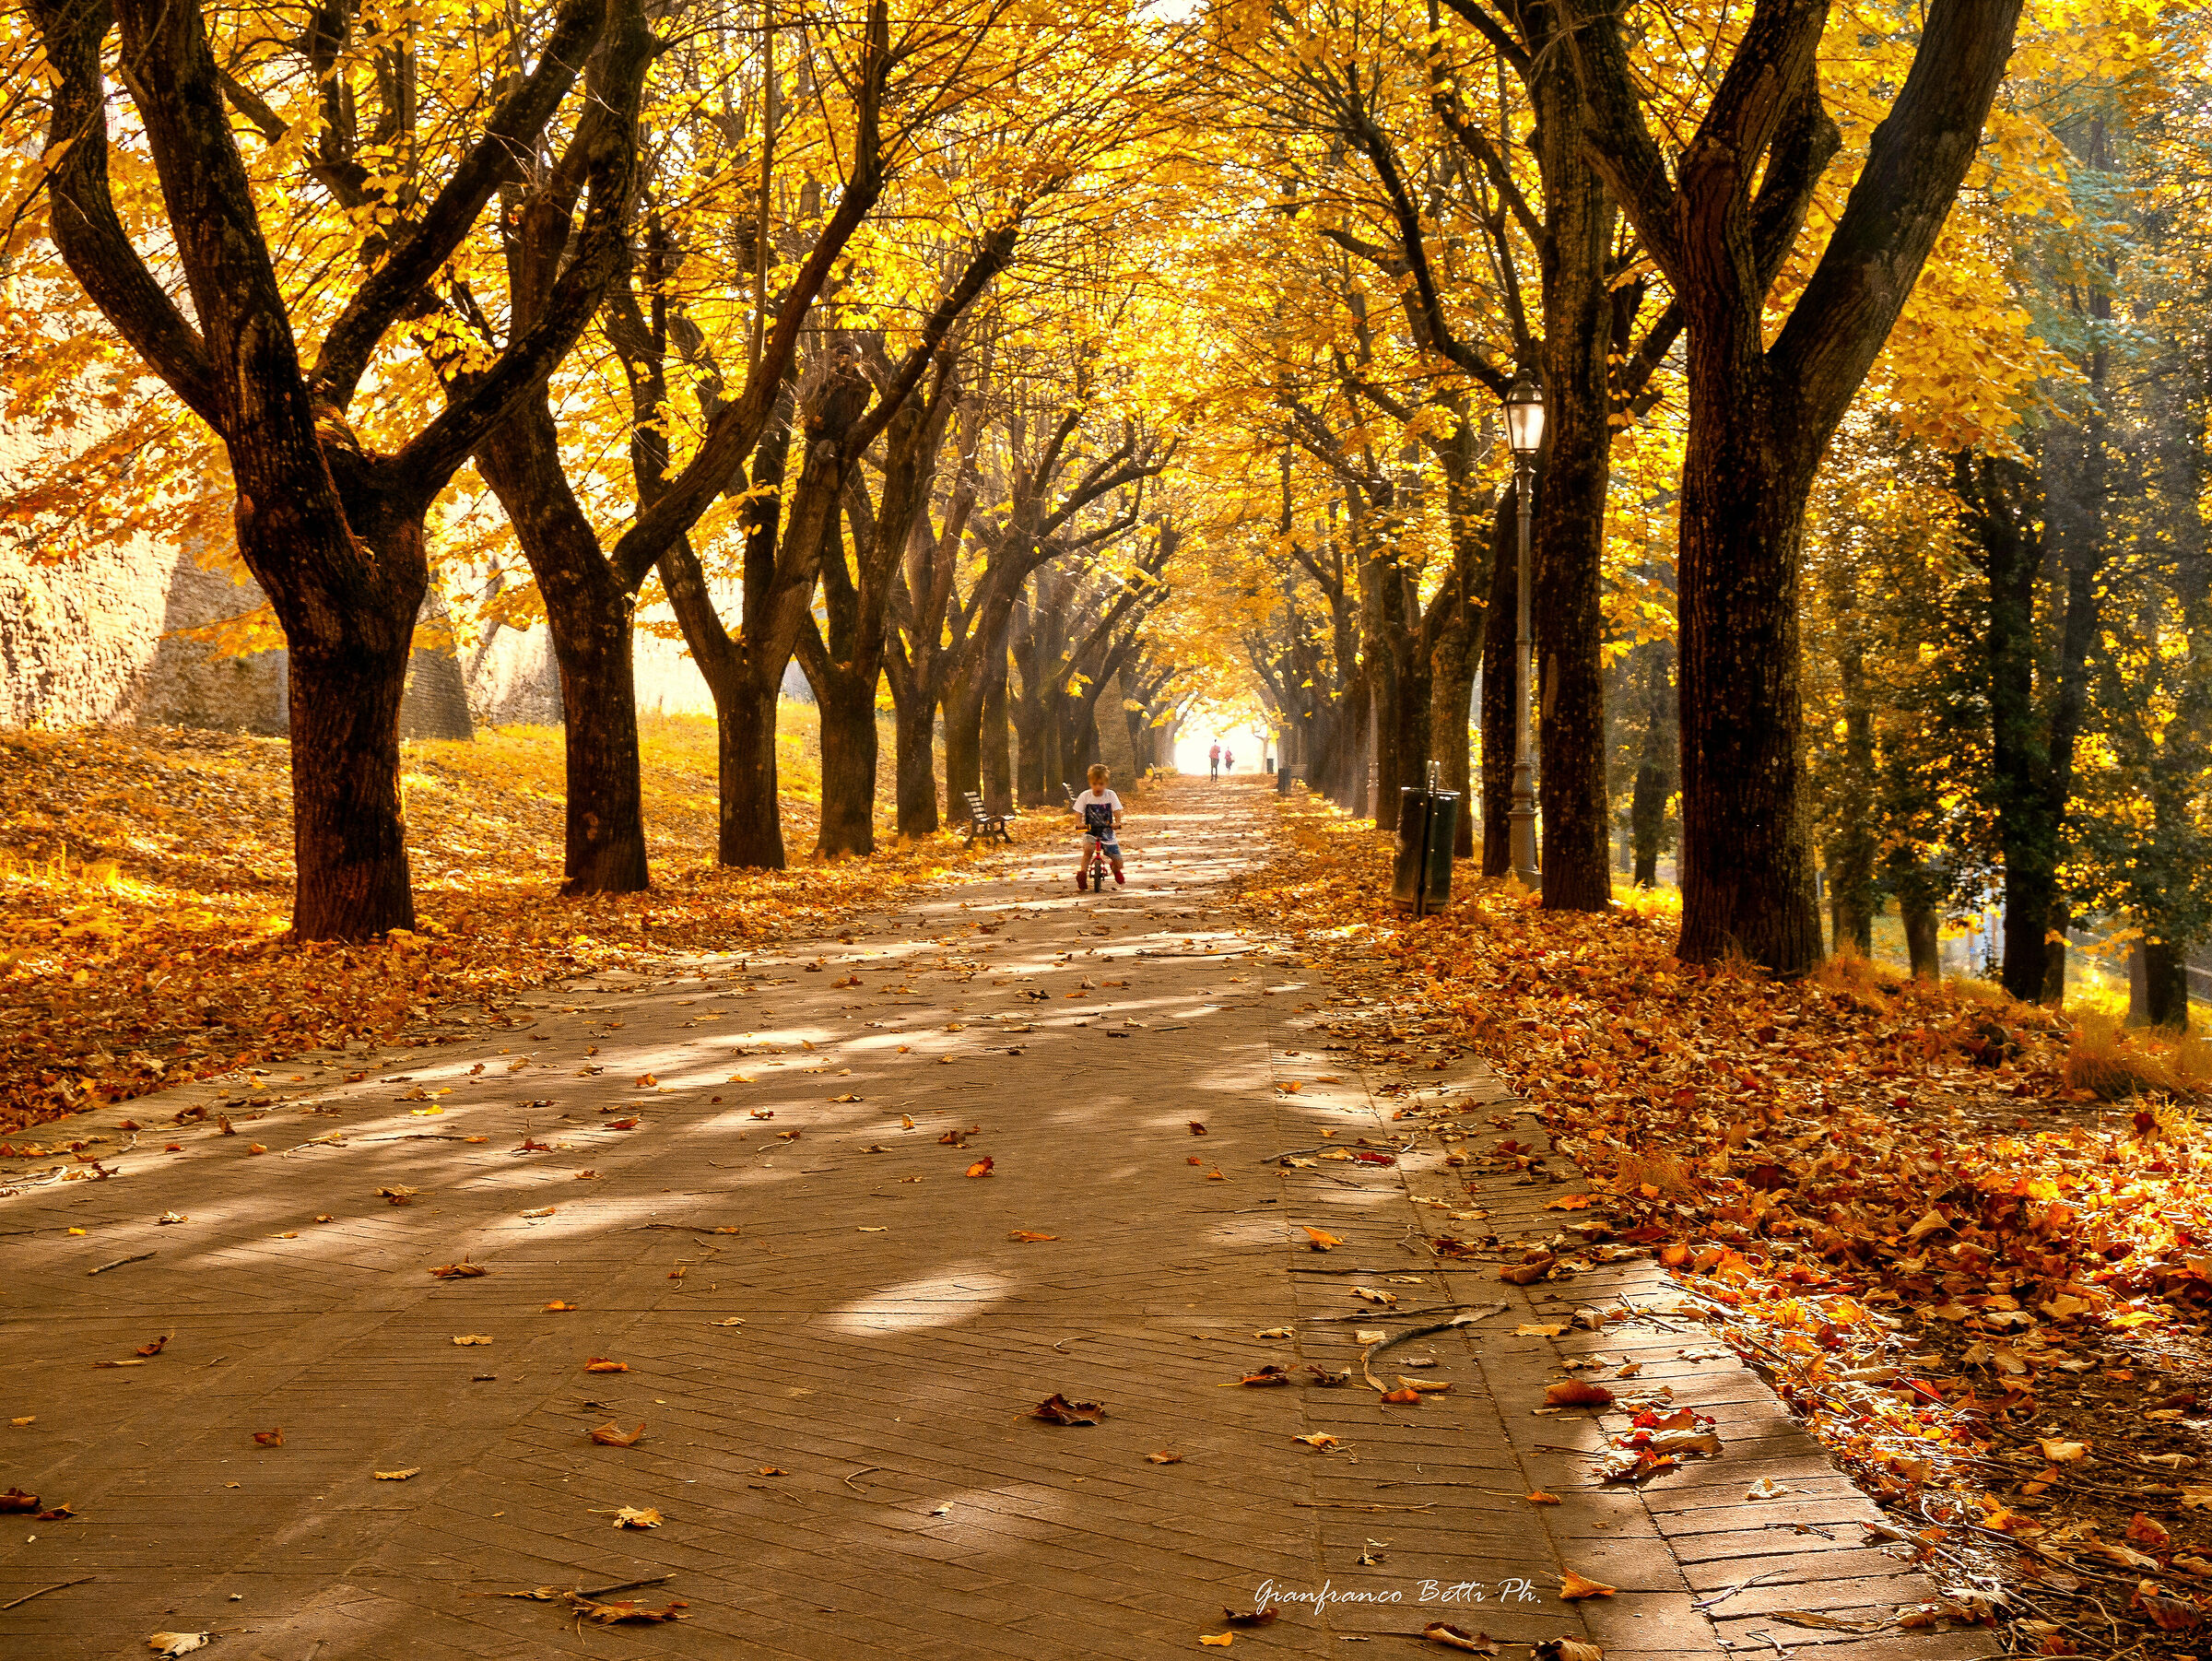 Autumn in the avenue...